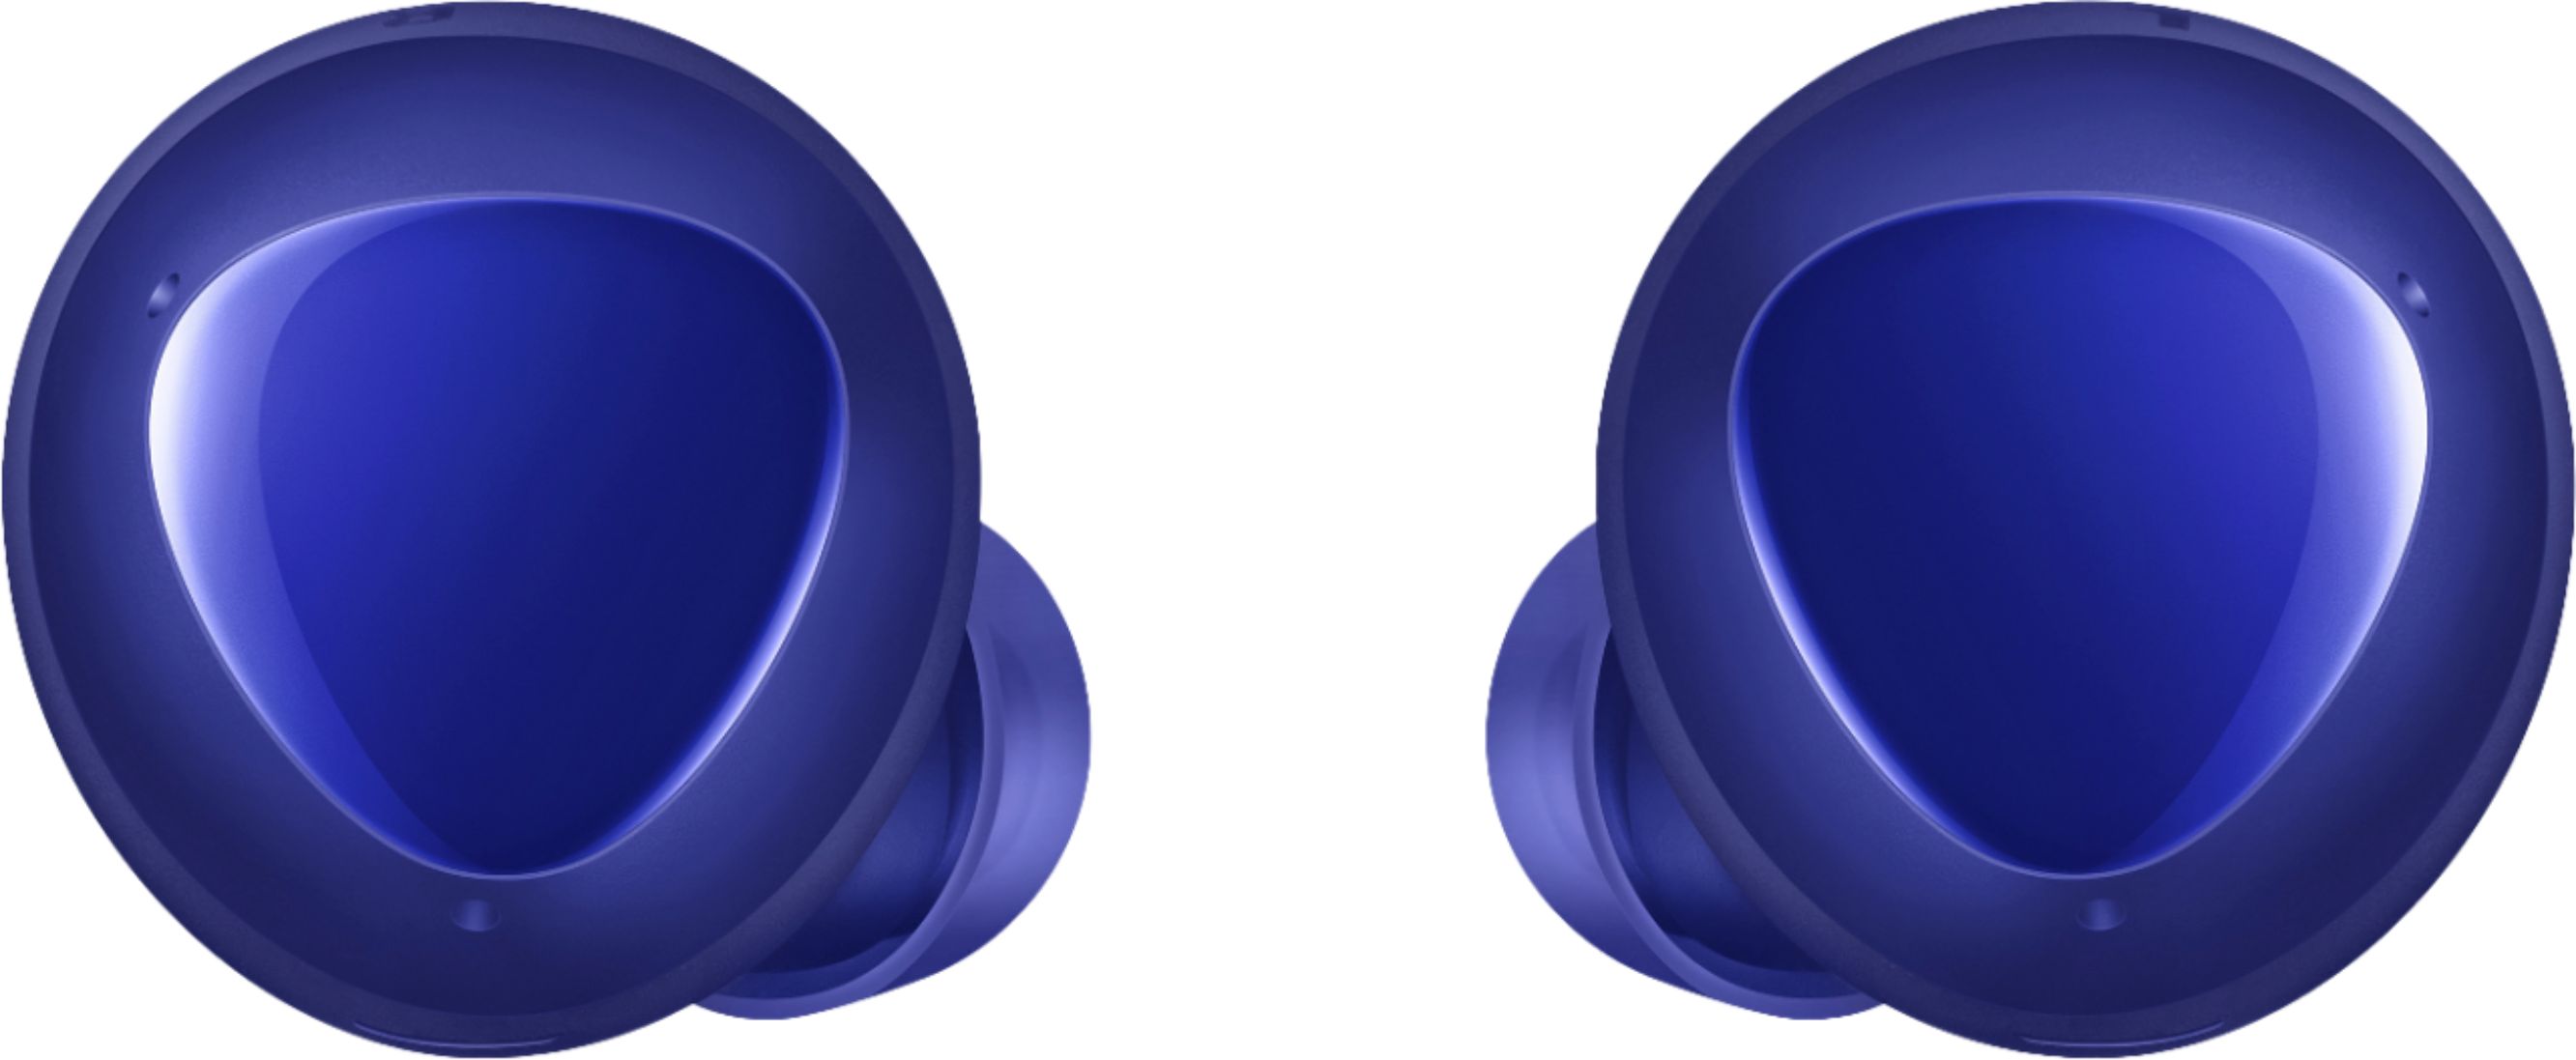 Samsung - Galaxy Buds+ True Wireless Earbud Headphones - Aura Blue